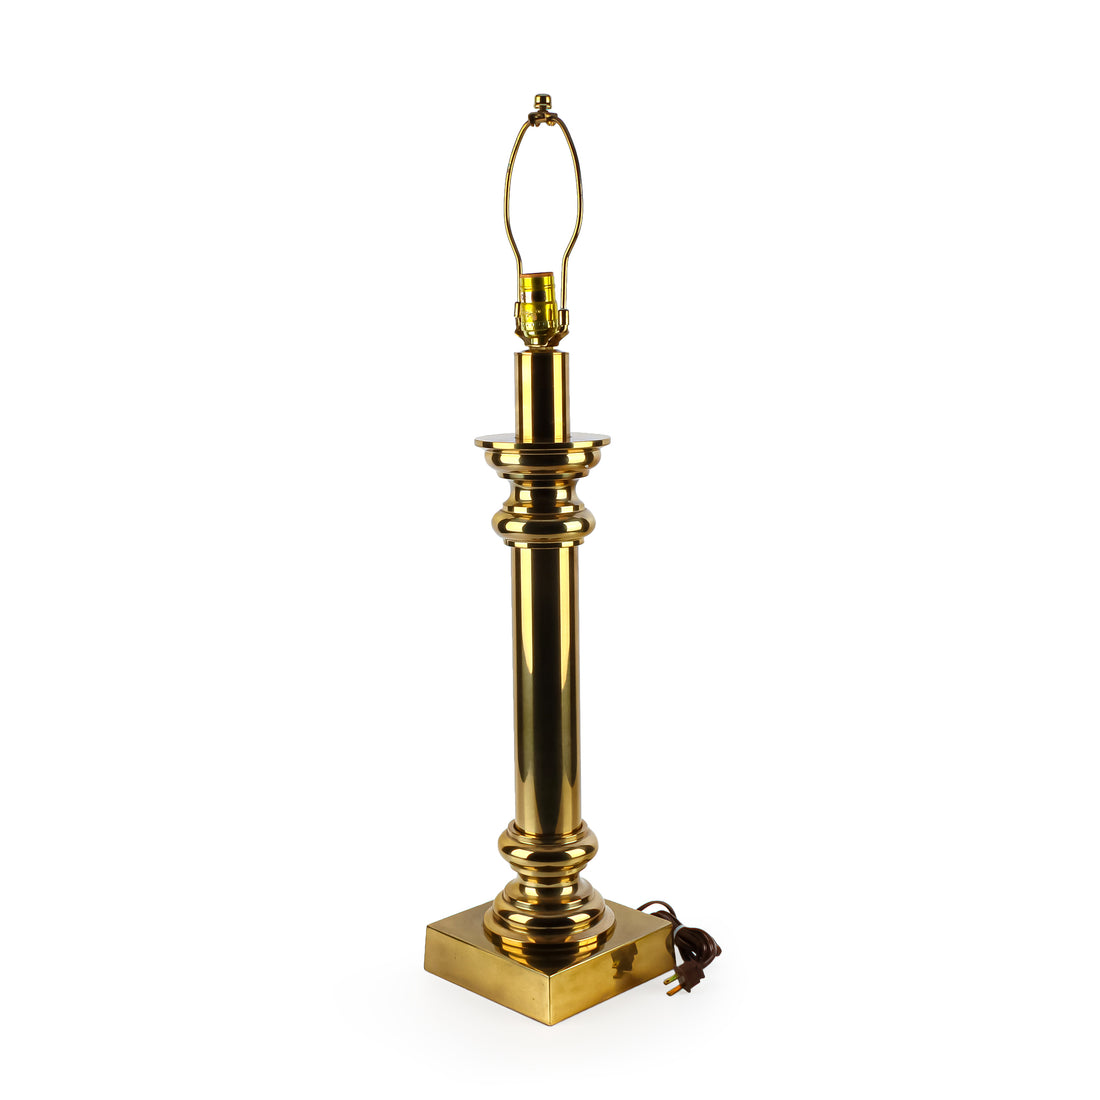 STIFFEL Brass Column Table Lamps - Set of 2